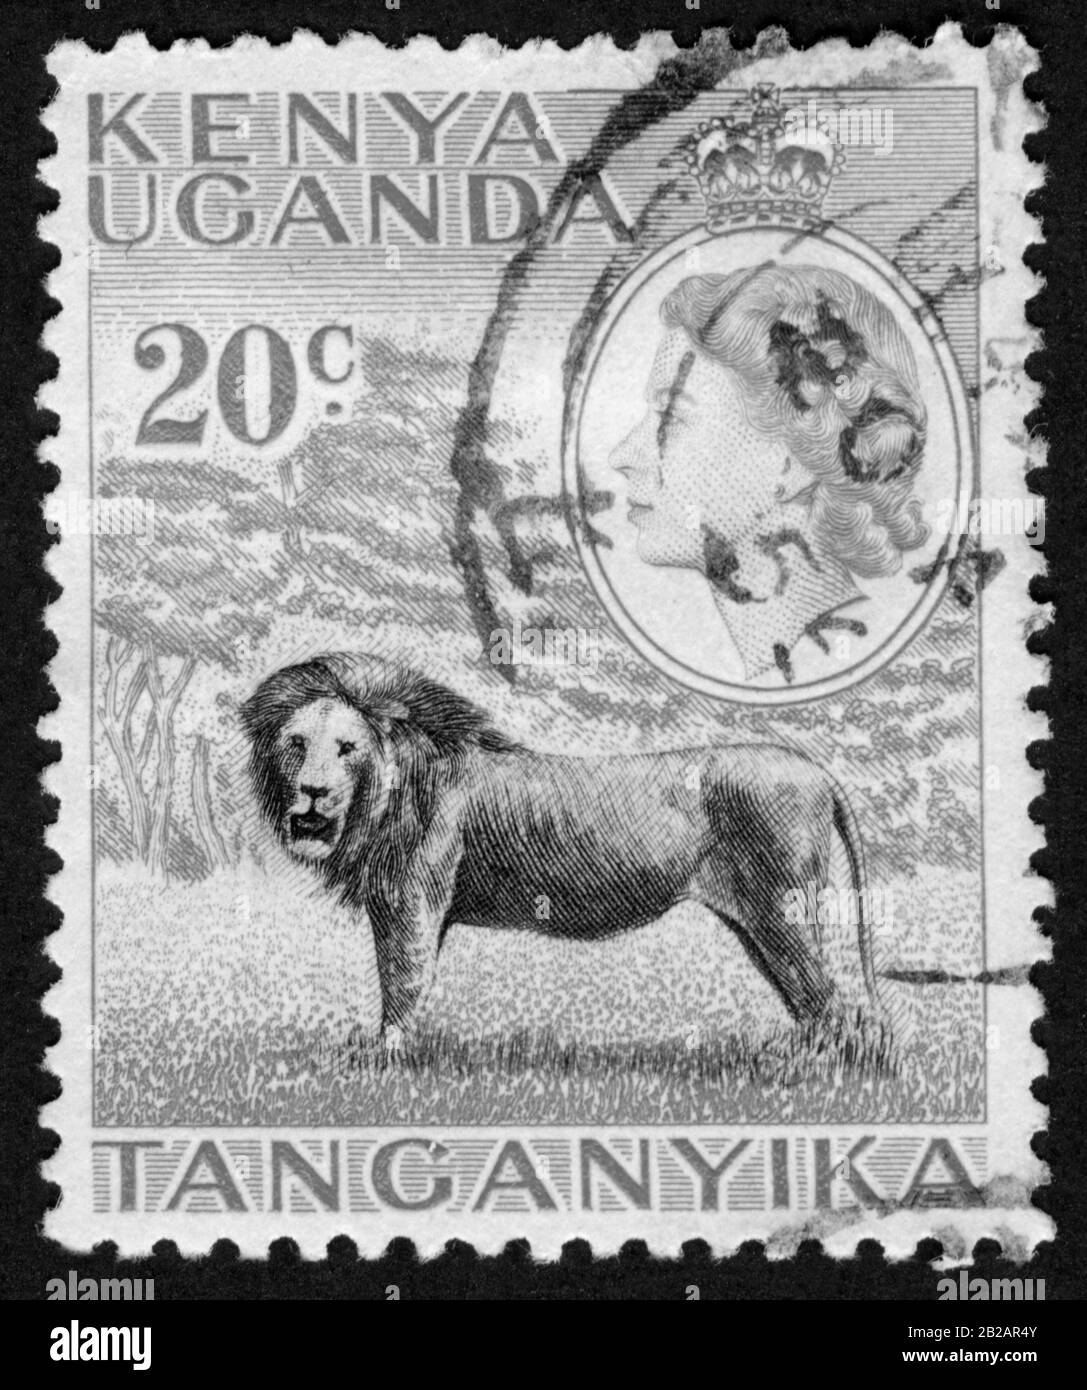 Stamp print in Uganda,Kenya,Tanganyika,animals, Stock Photo